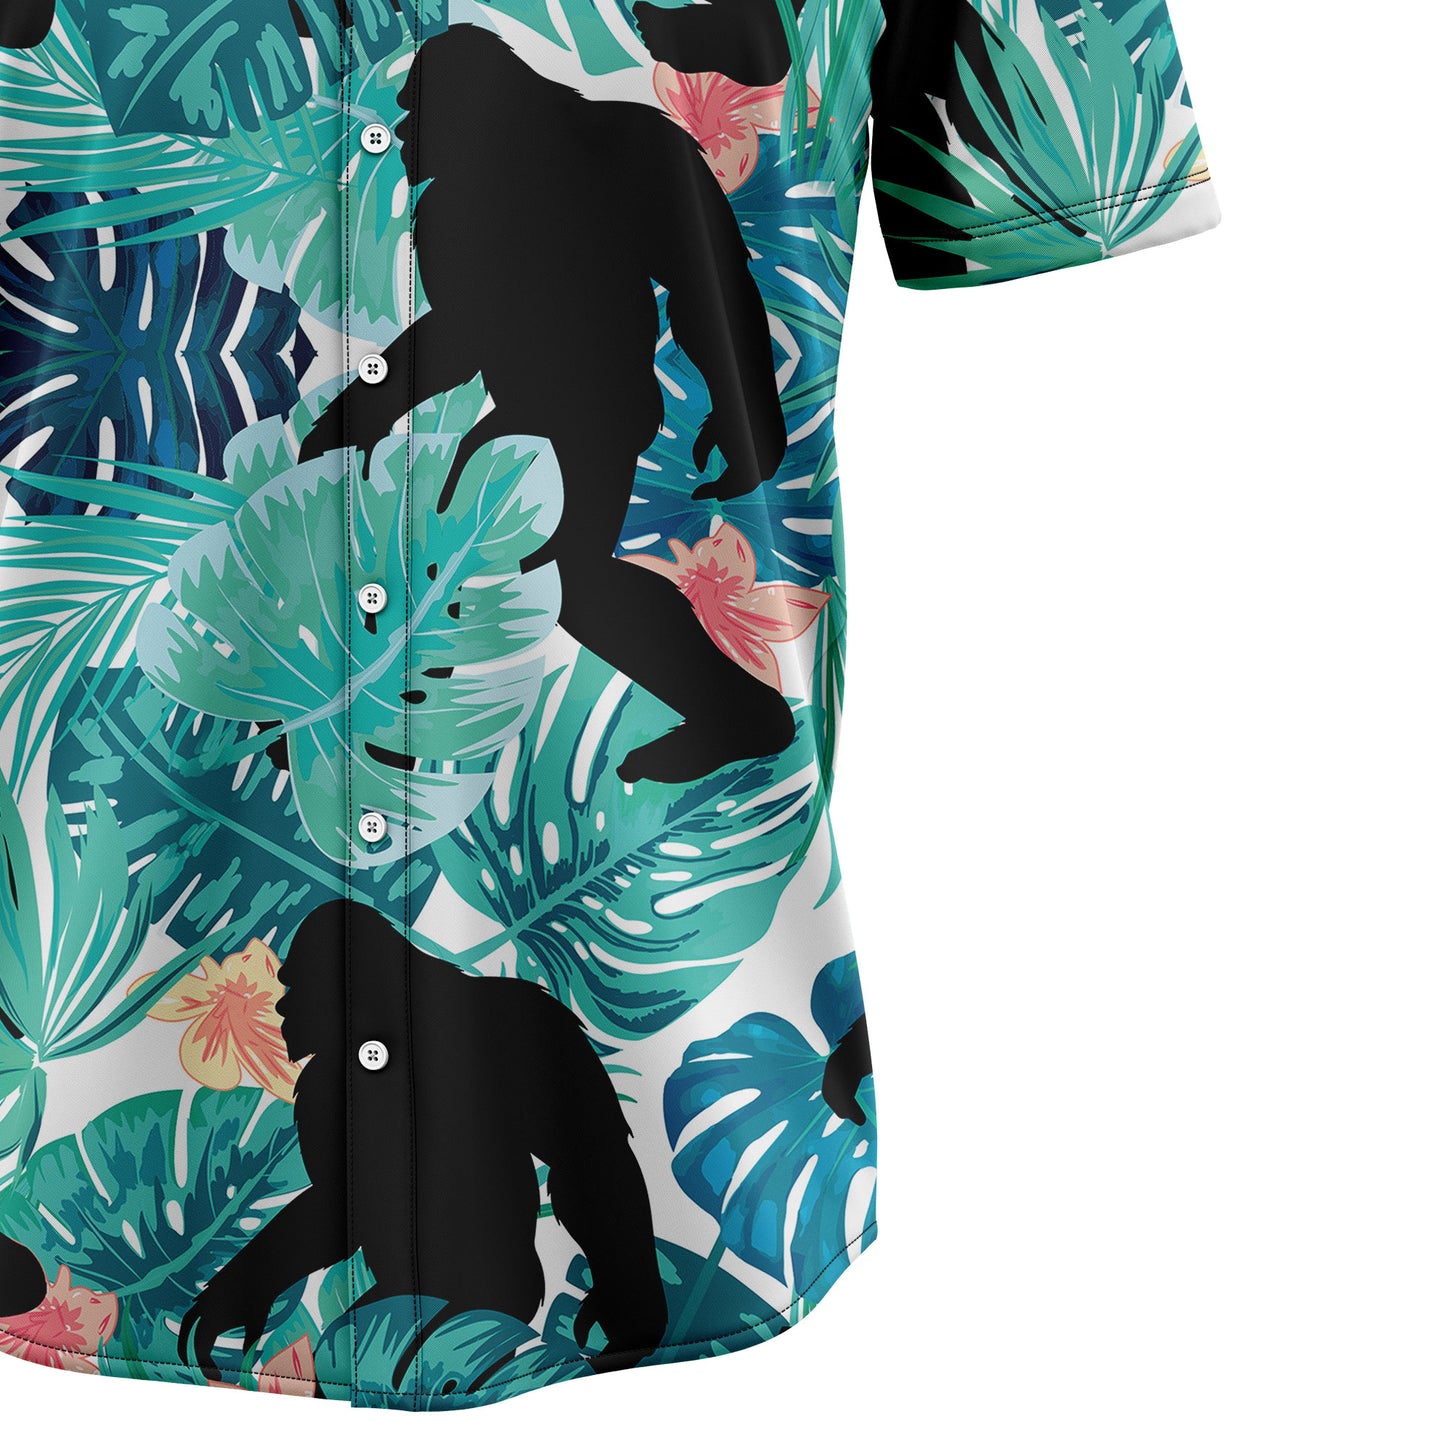 Tropical Bigfoot H1709 Hawaiian Shirt